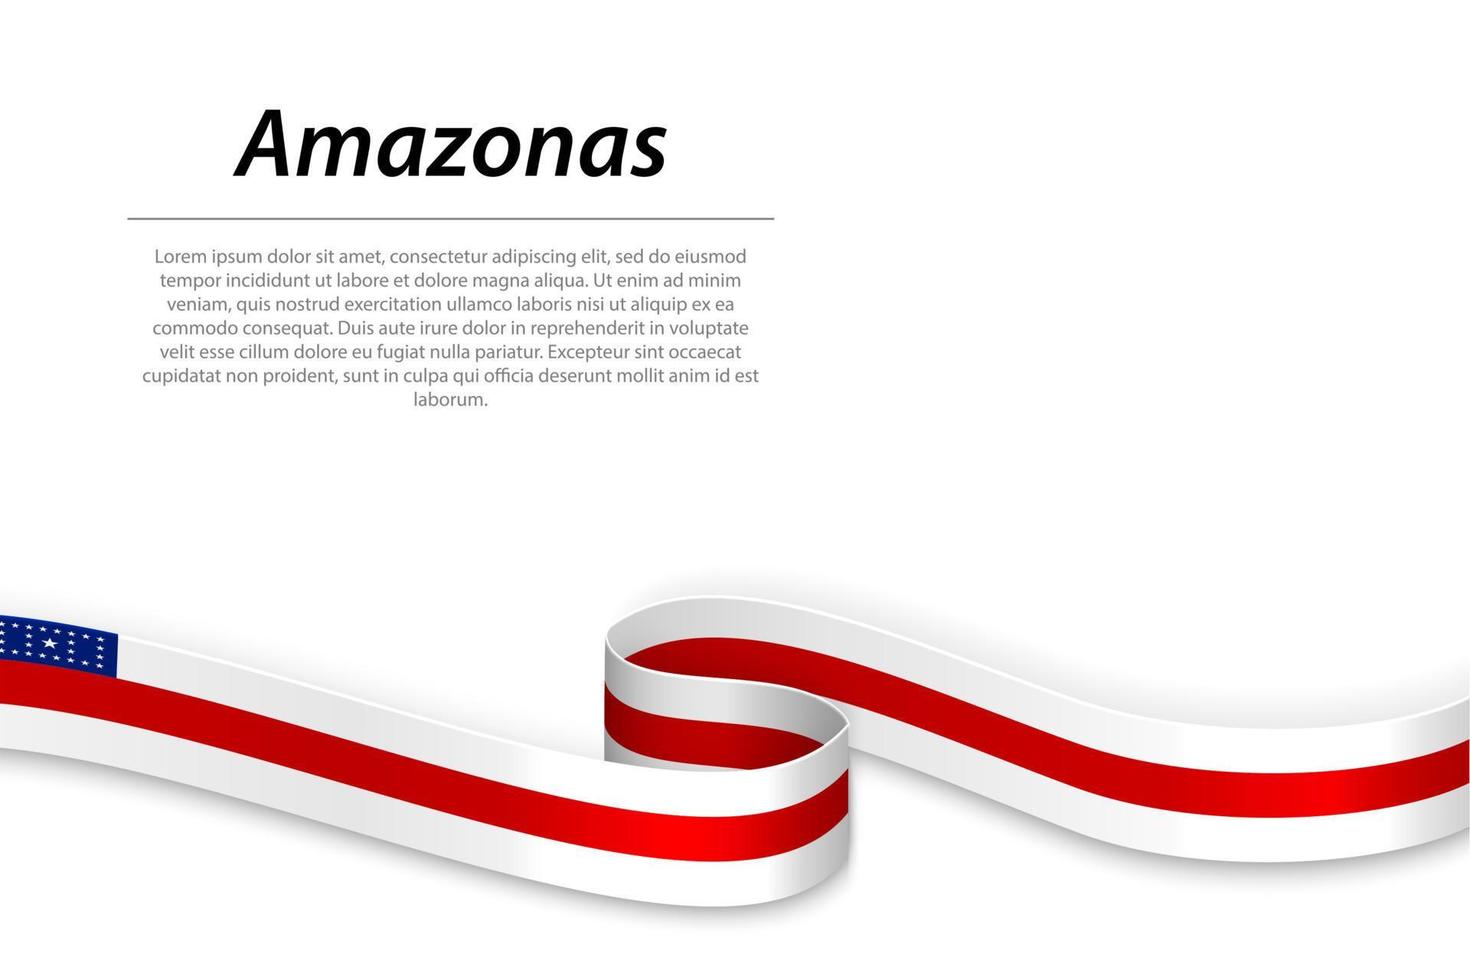 ondulación cinta o bandera con bandera de amazonas vector